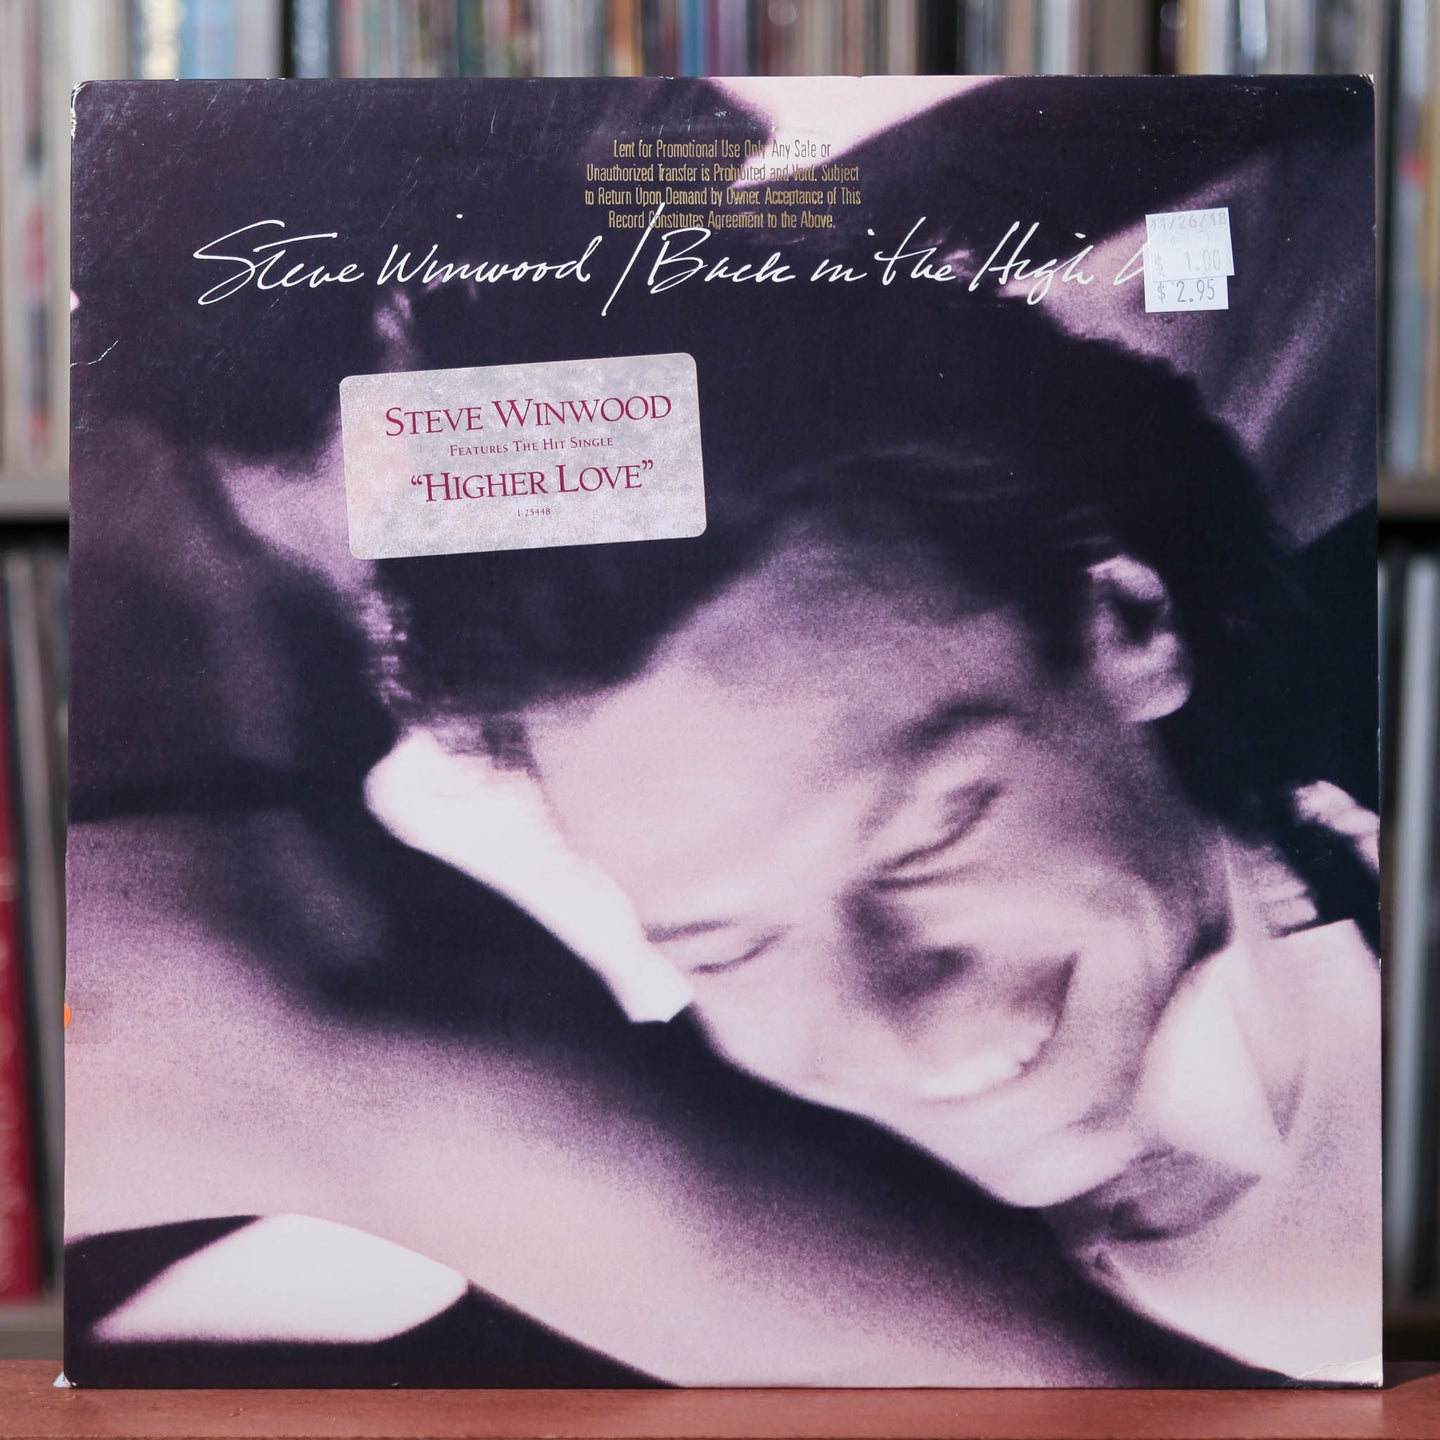 Steve Winwood - Back In The High Life - Rare PROMO - 1986 Island, EX/VG+